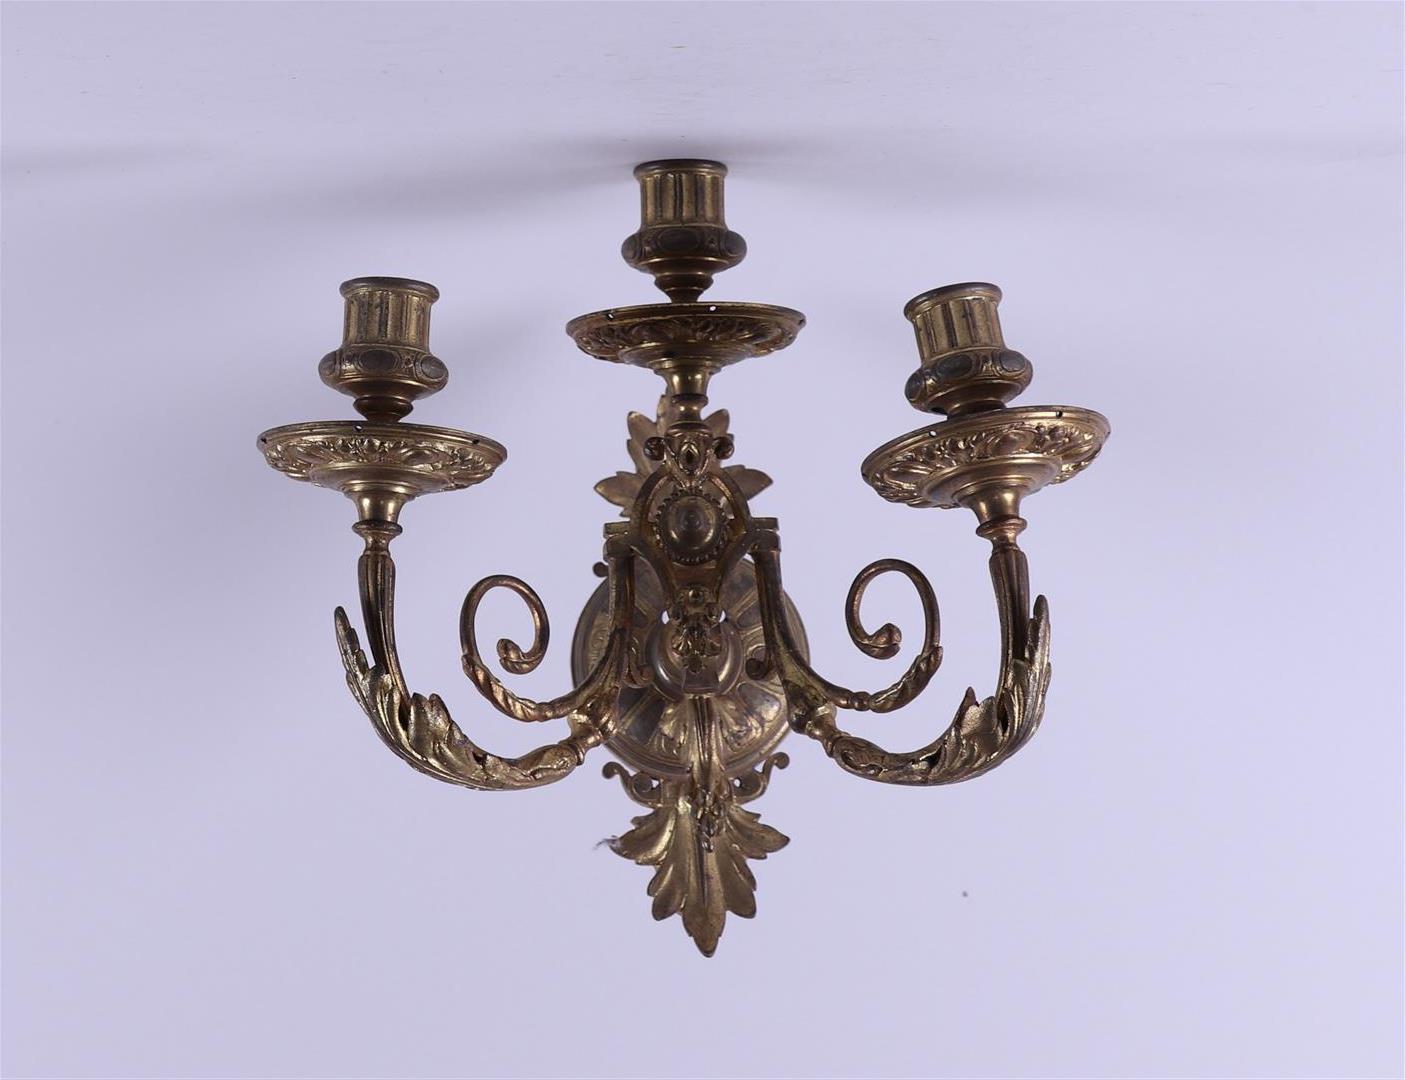 A brass three-armed wall chandelier.Ca. 1900.